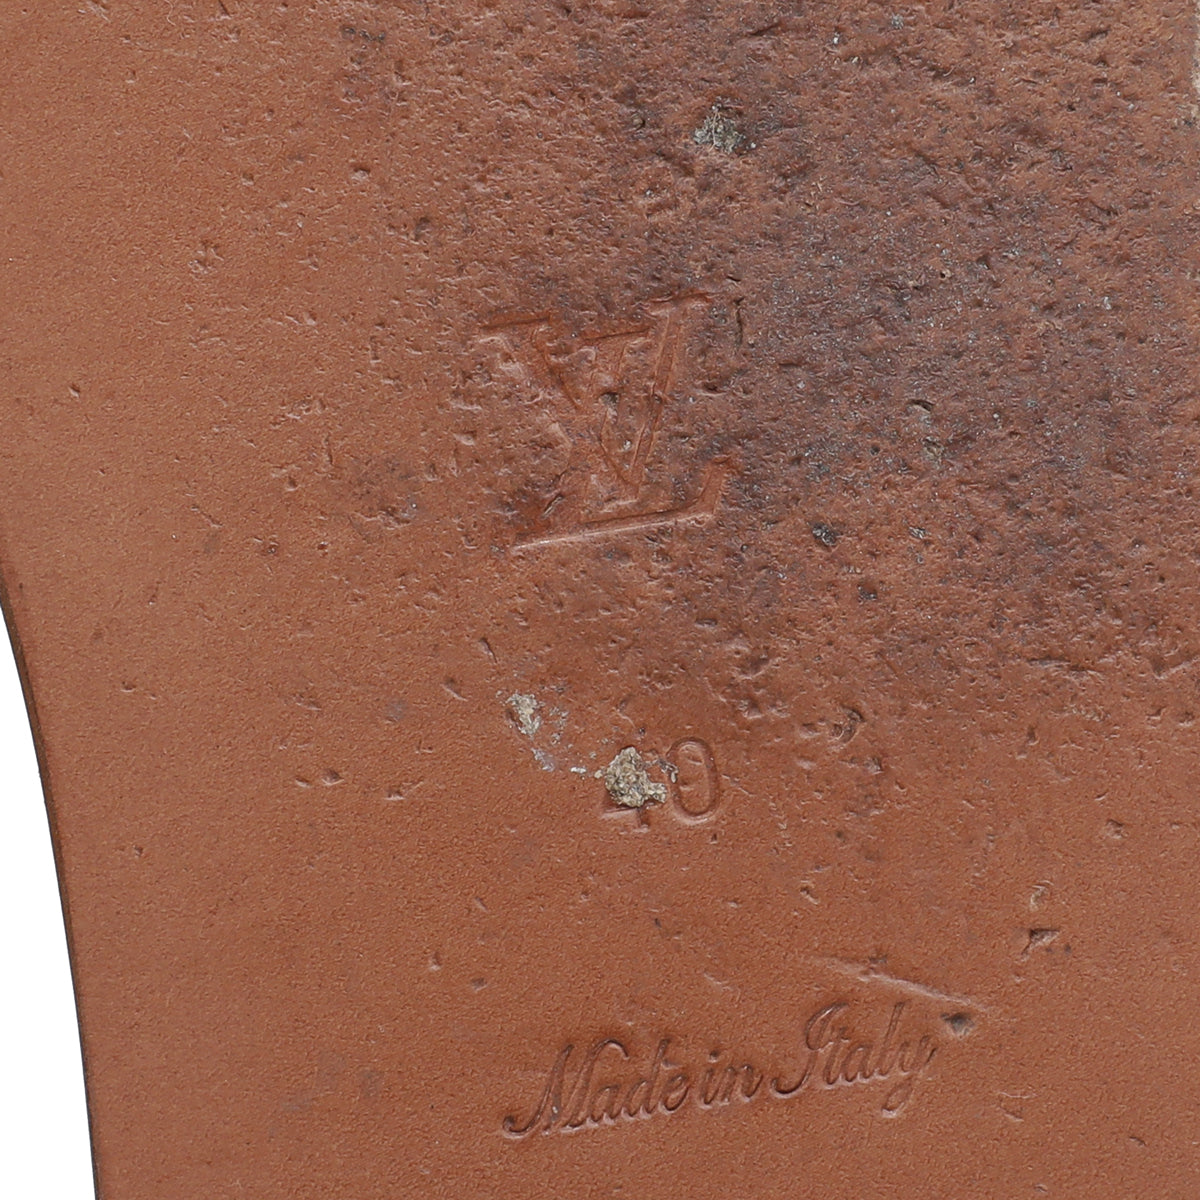 Louis Vuitton Lock It Flat Mule Cacao. Size 40.0